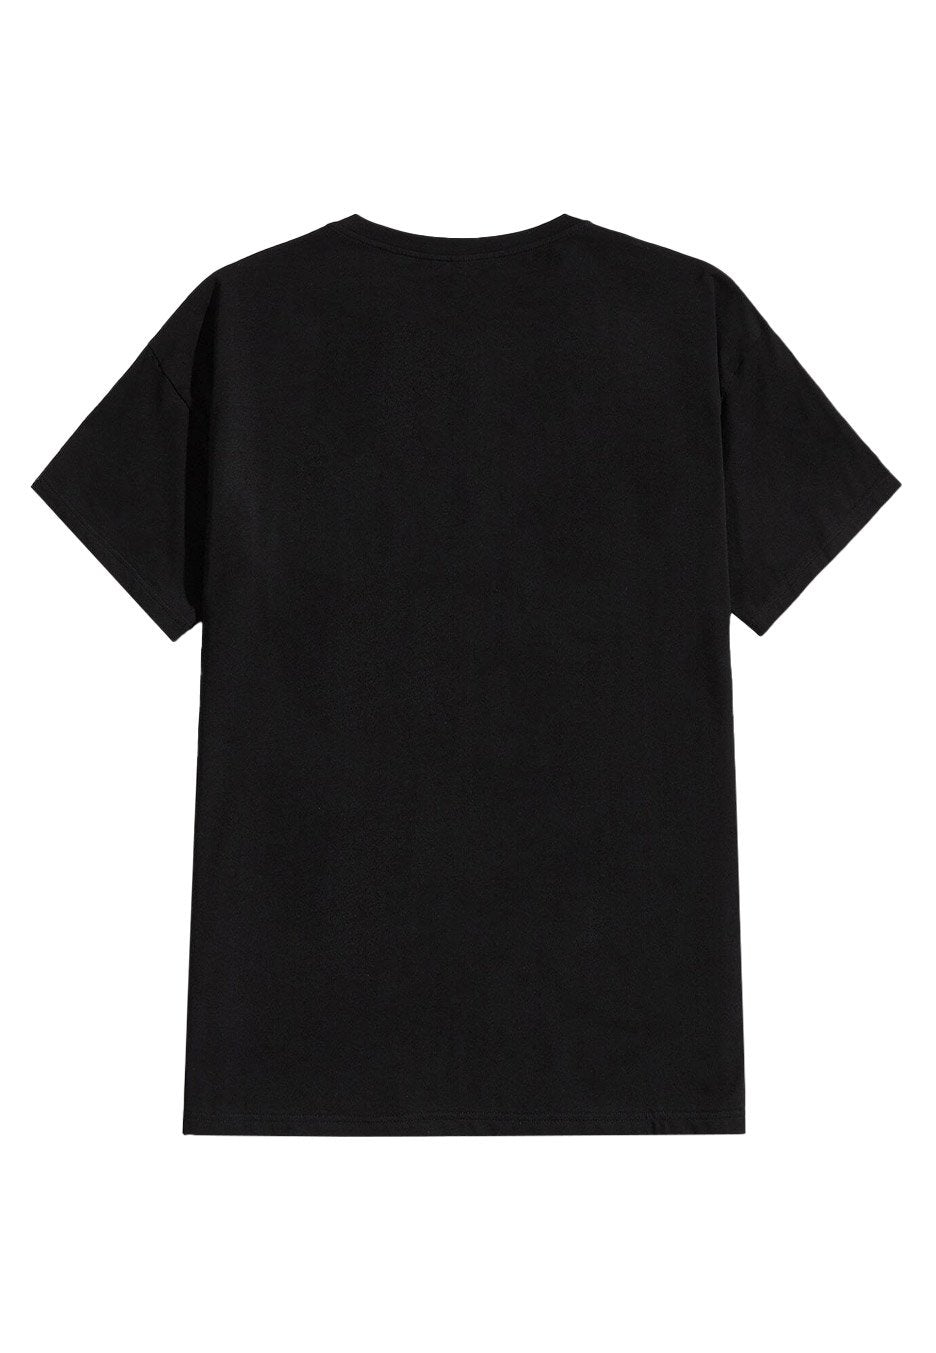 Nirvana - Lithium Oversized - T-Shirt